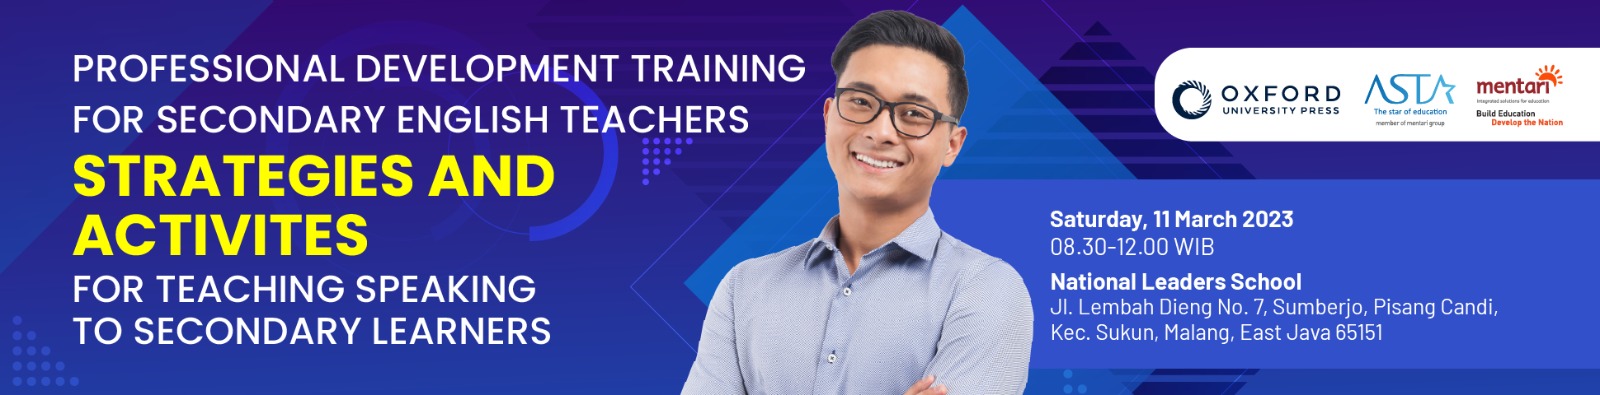 Professional Development Training for Secondary English Teachers - MALANG